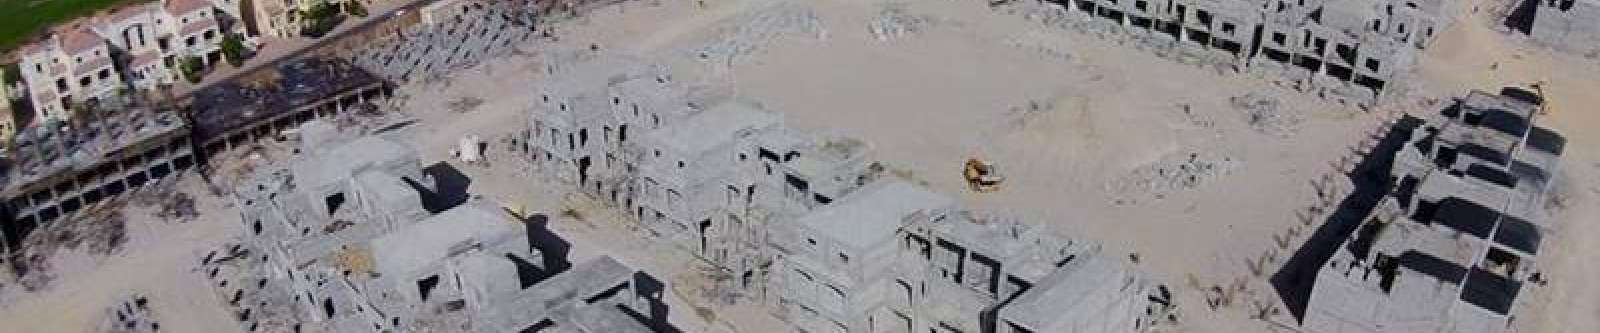 Development of new villas in Umm Al Quwain